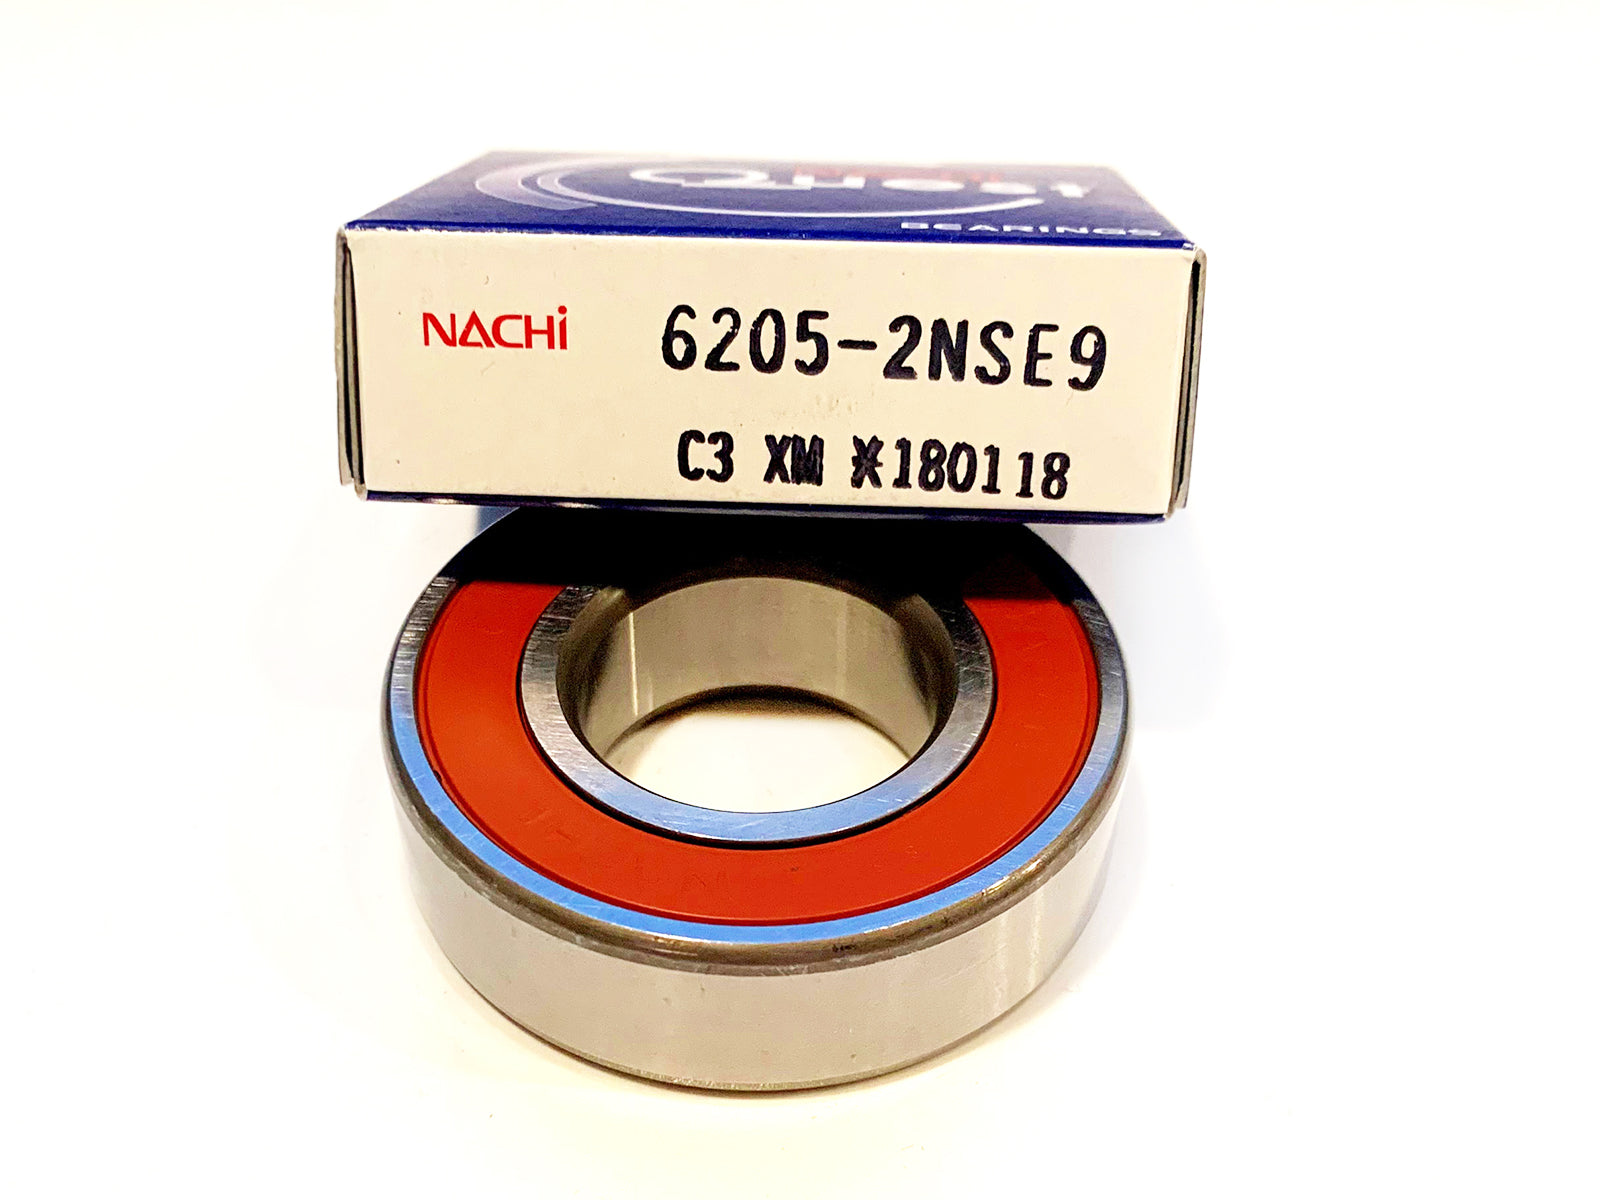 6205-2NSE9 C3 Nachi Ball Bearing - ppdistributors